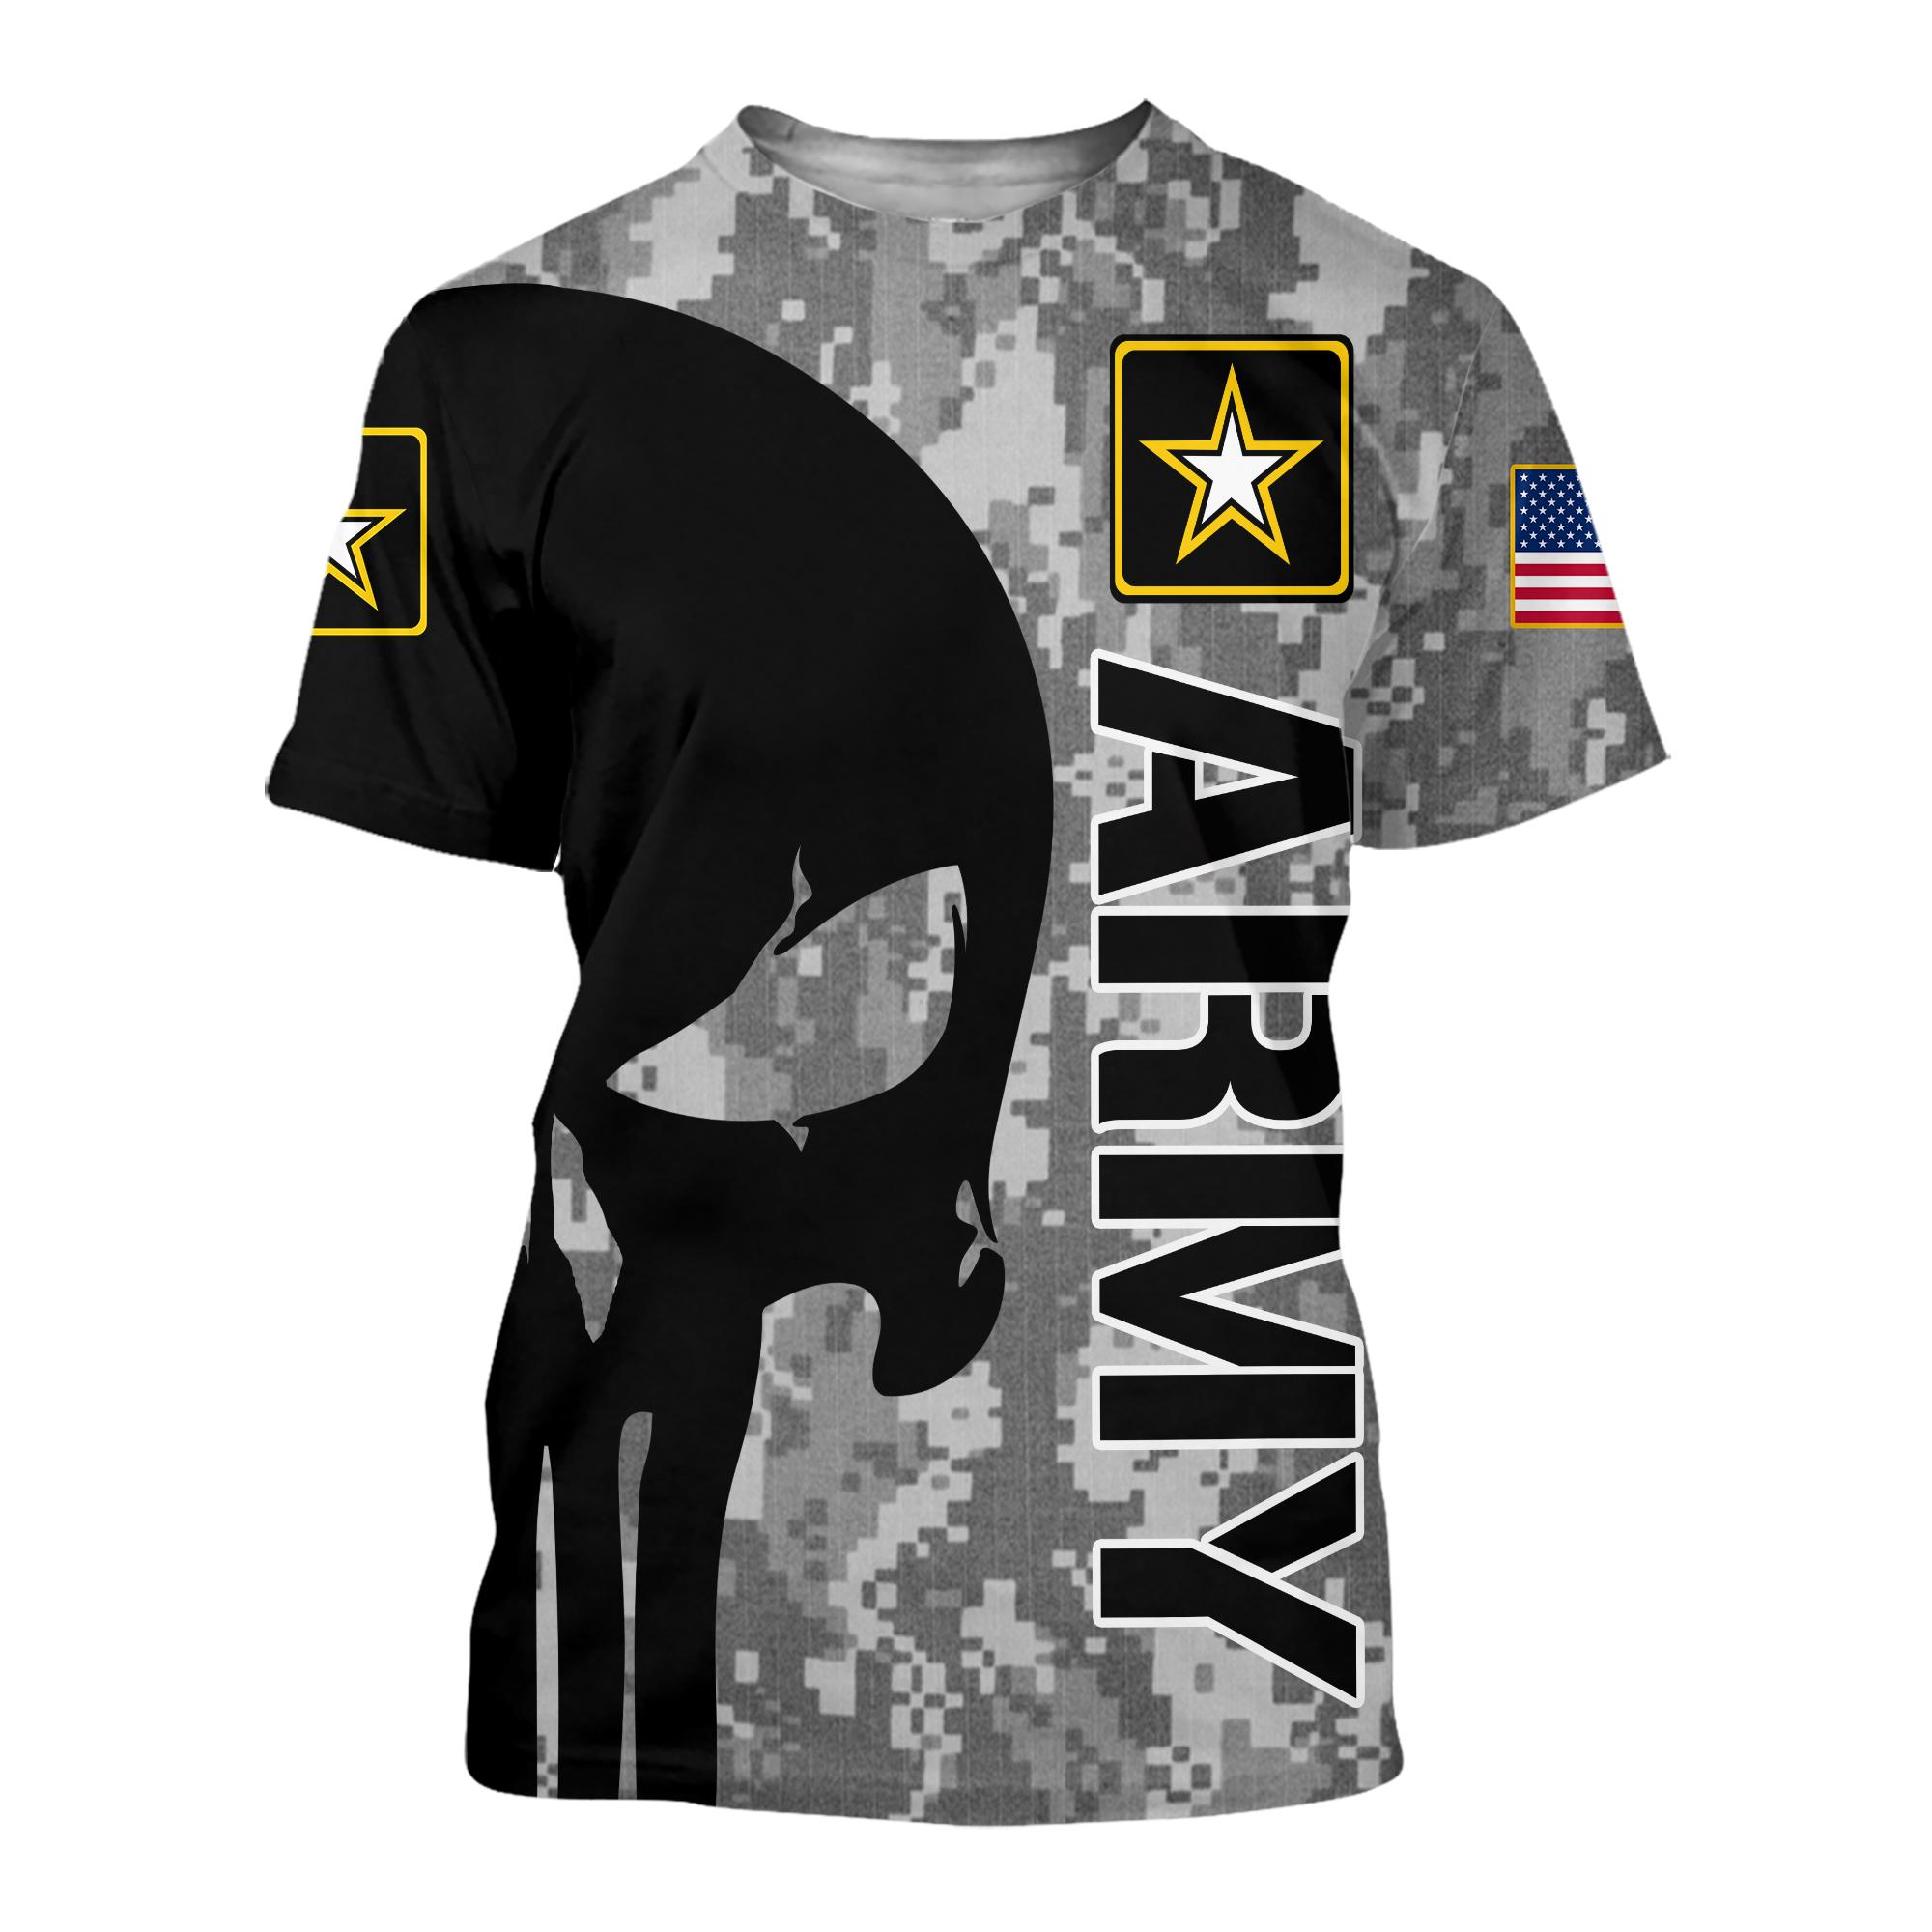 Original US army skull 3d t-shirt